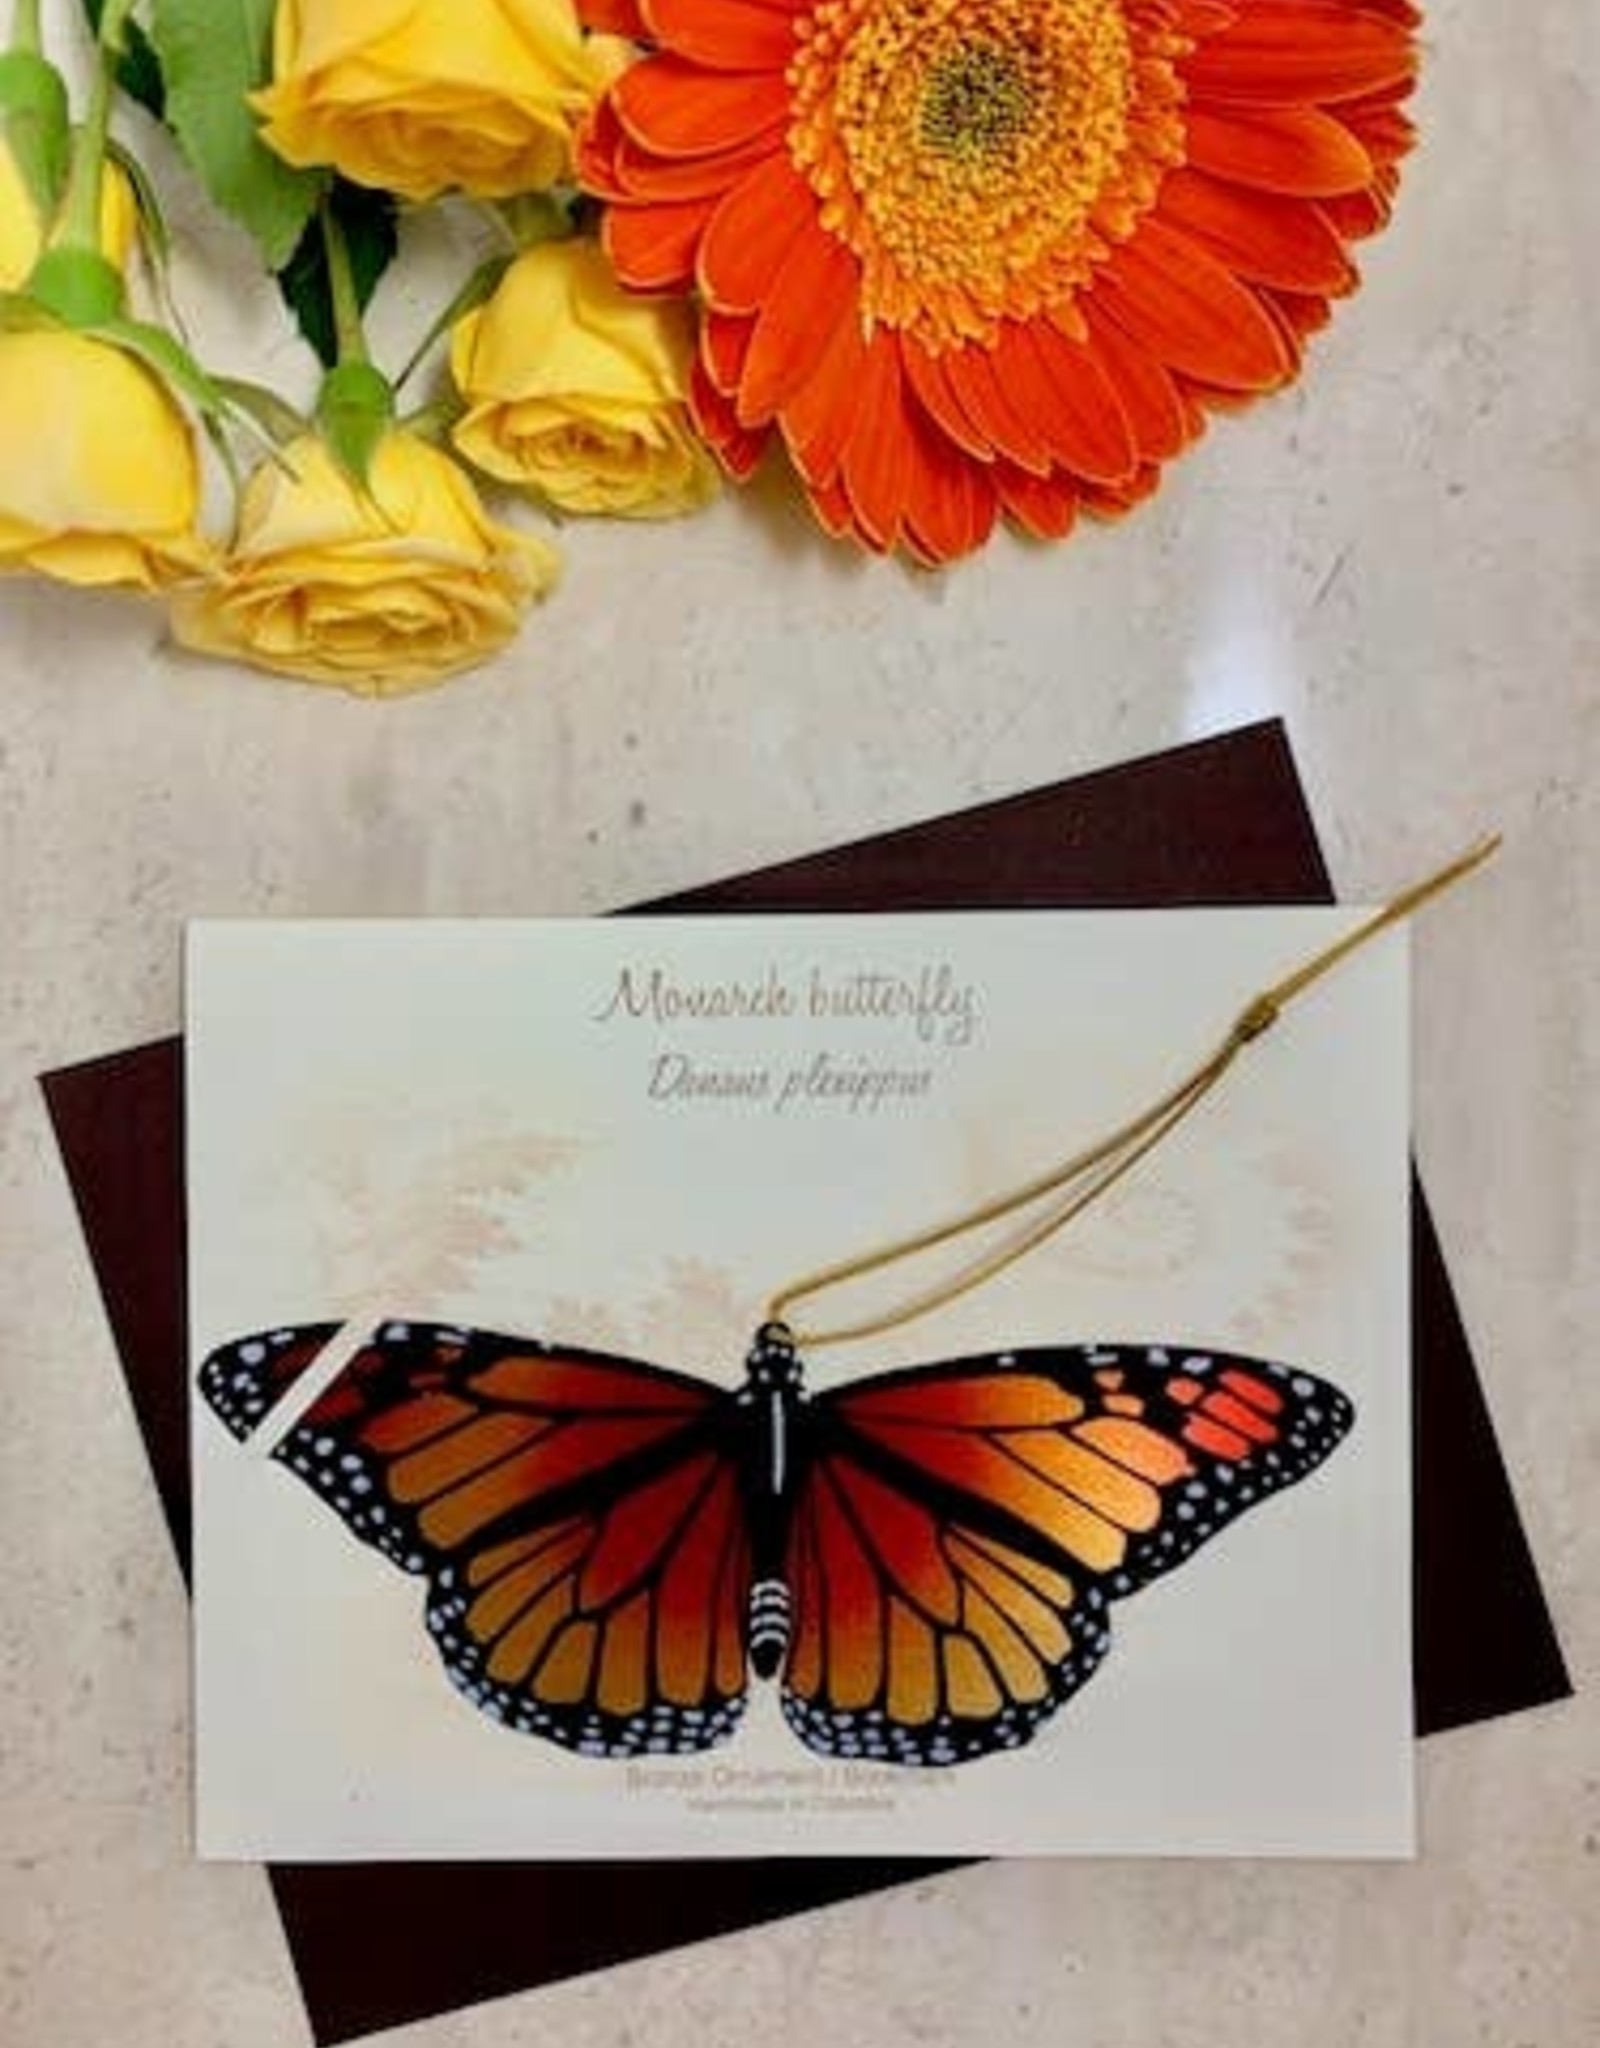 Tulia Artisans Monarch Butterfly Ornament